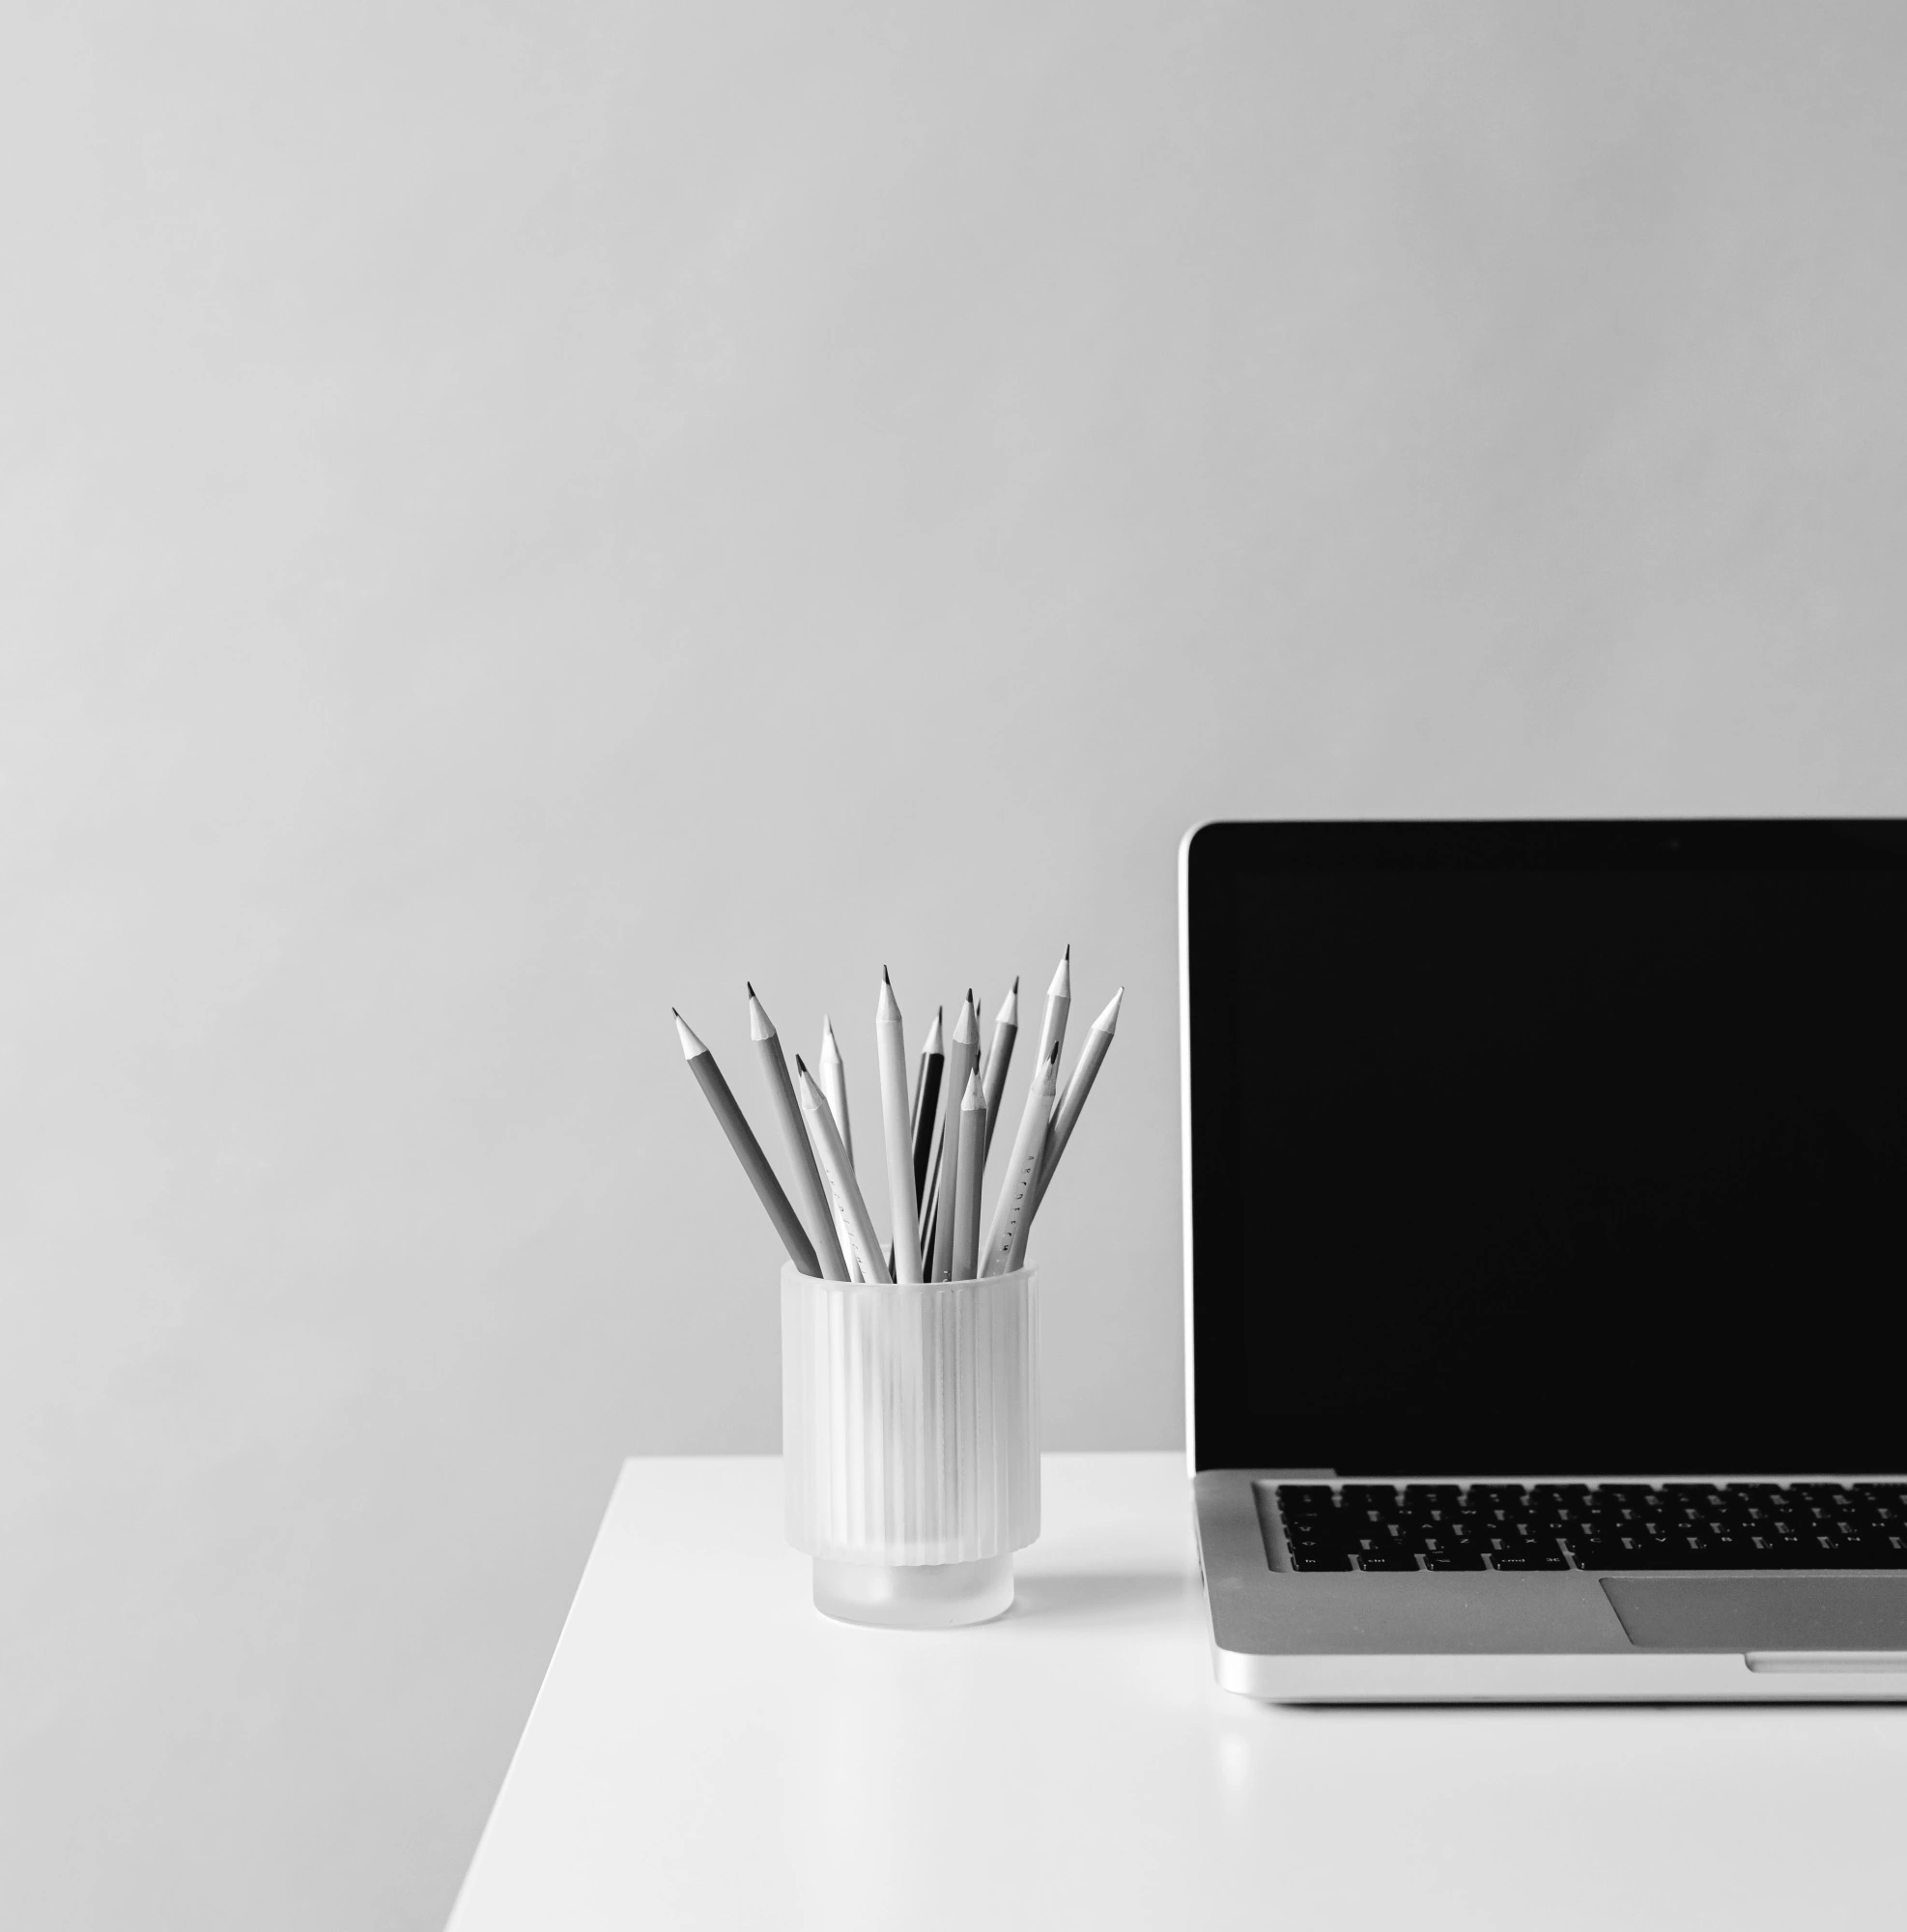 A desk setup for a website copywriter with laptop and jar of pencils.